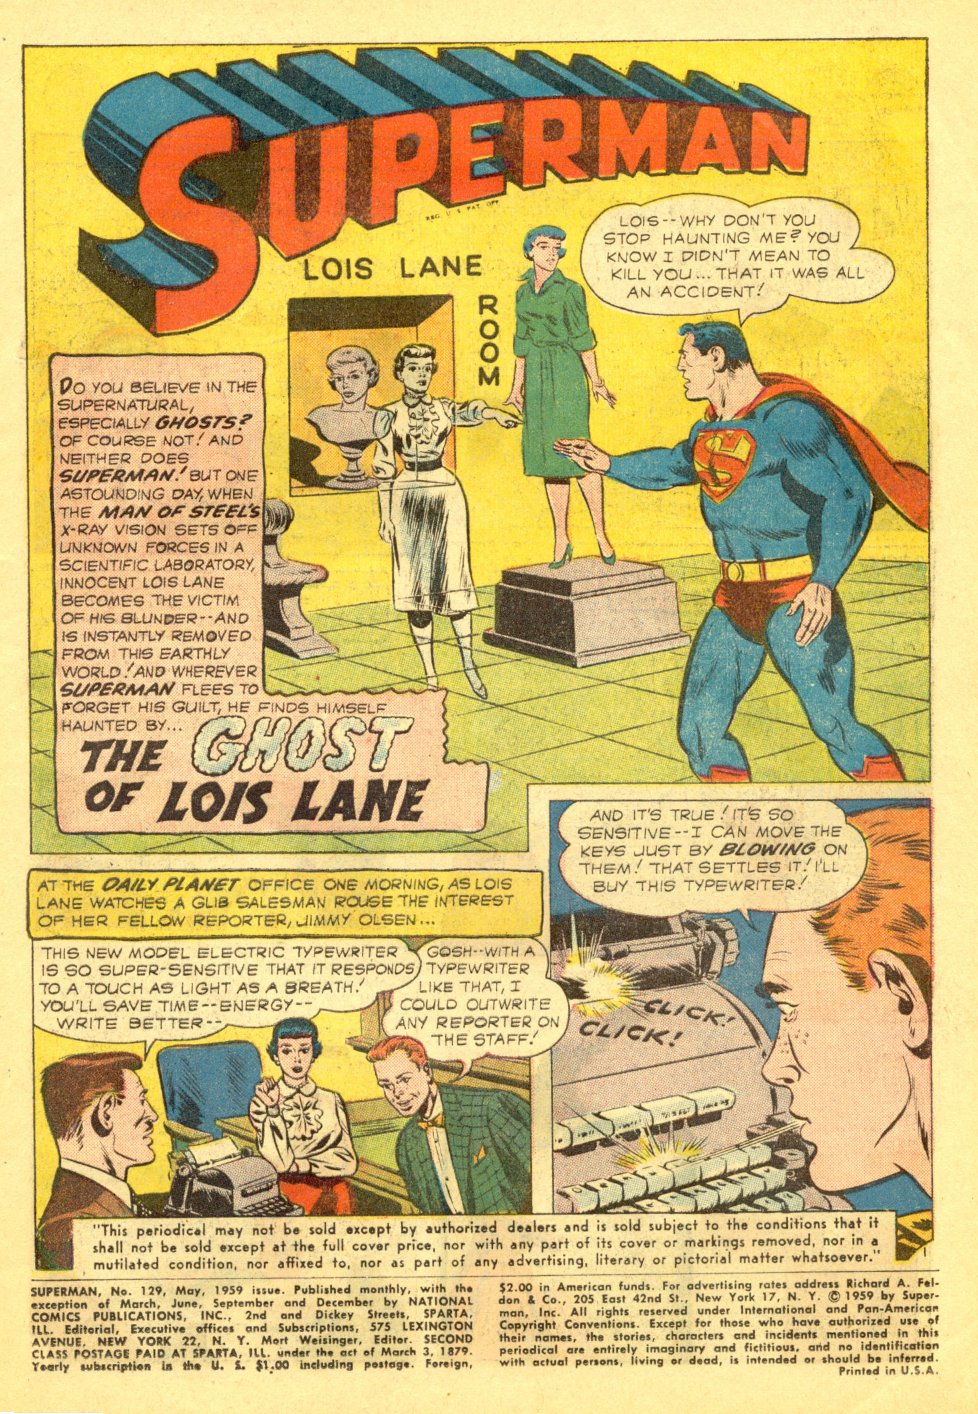 download the return of superman comic book